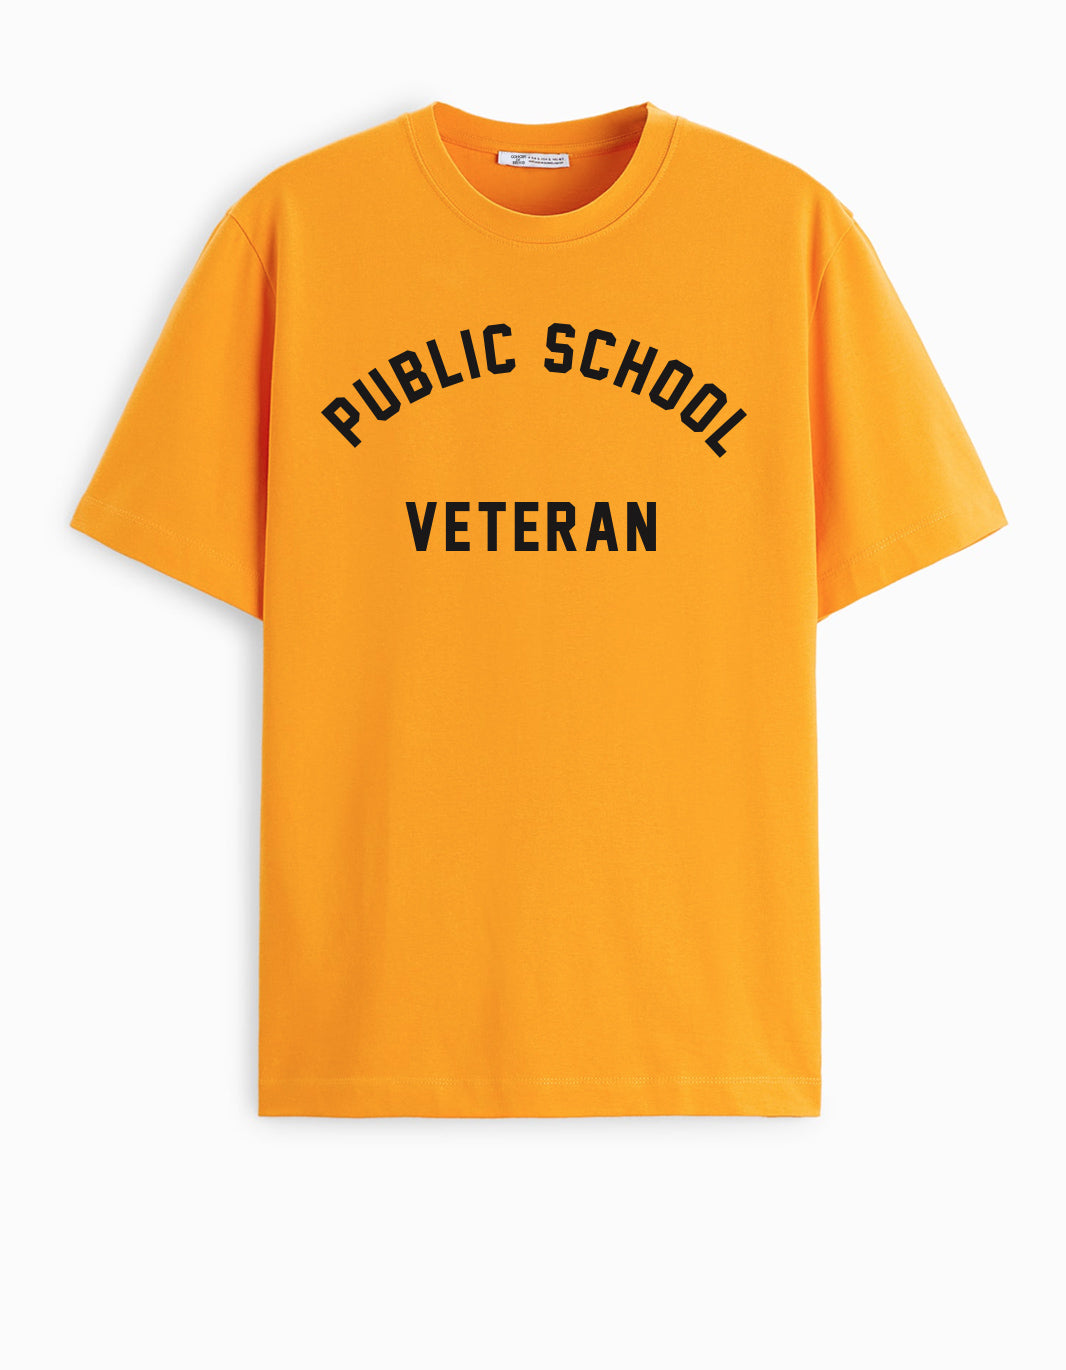 Public School Veteran Gold T-Shirt